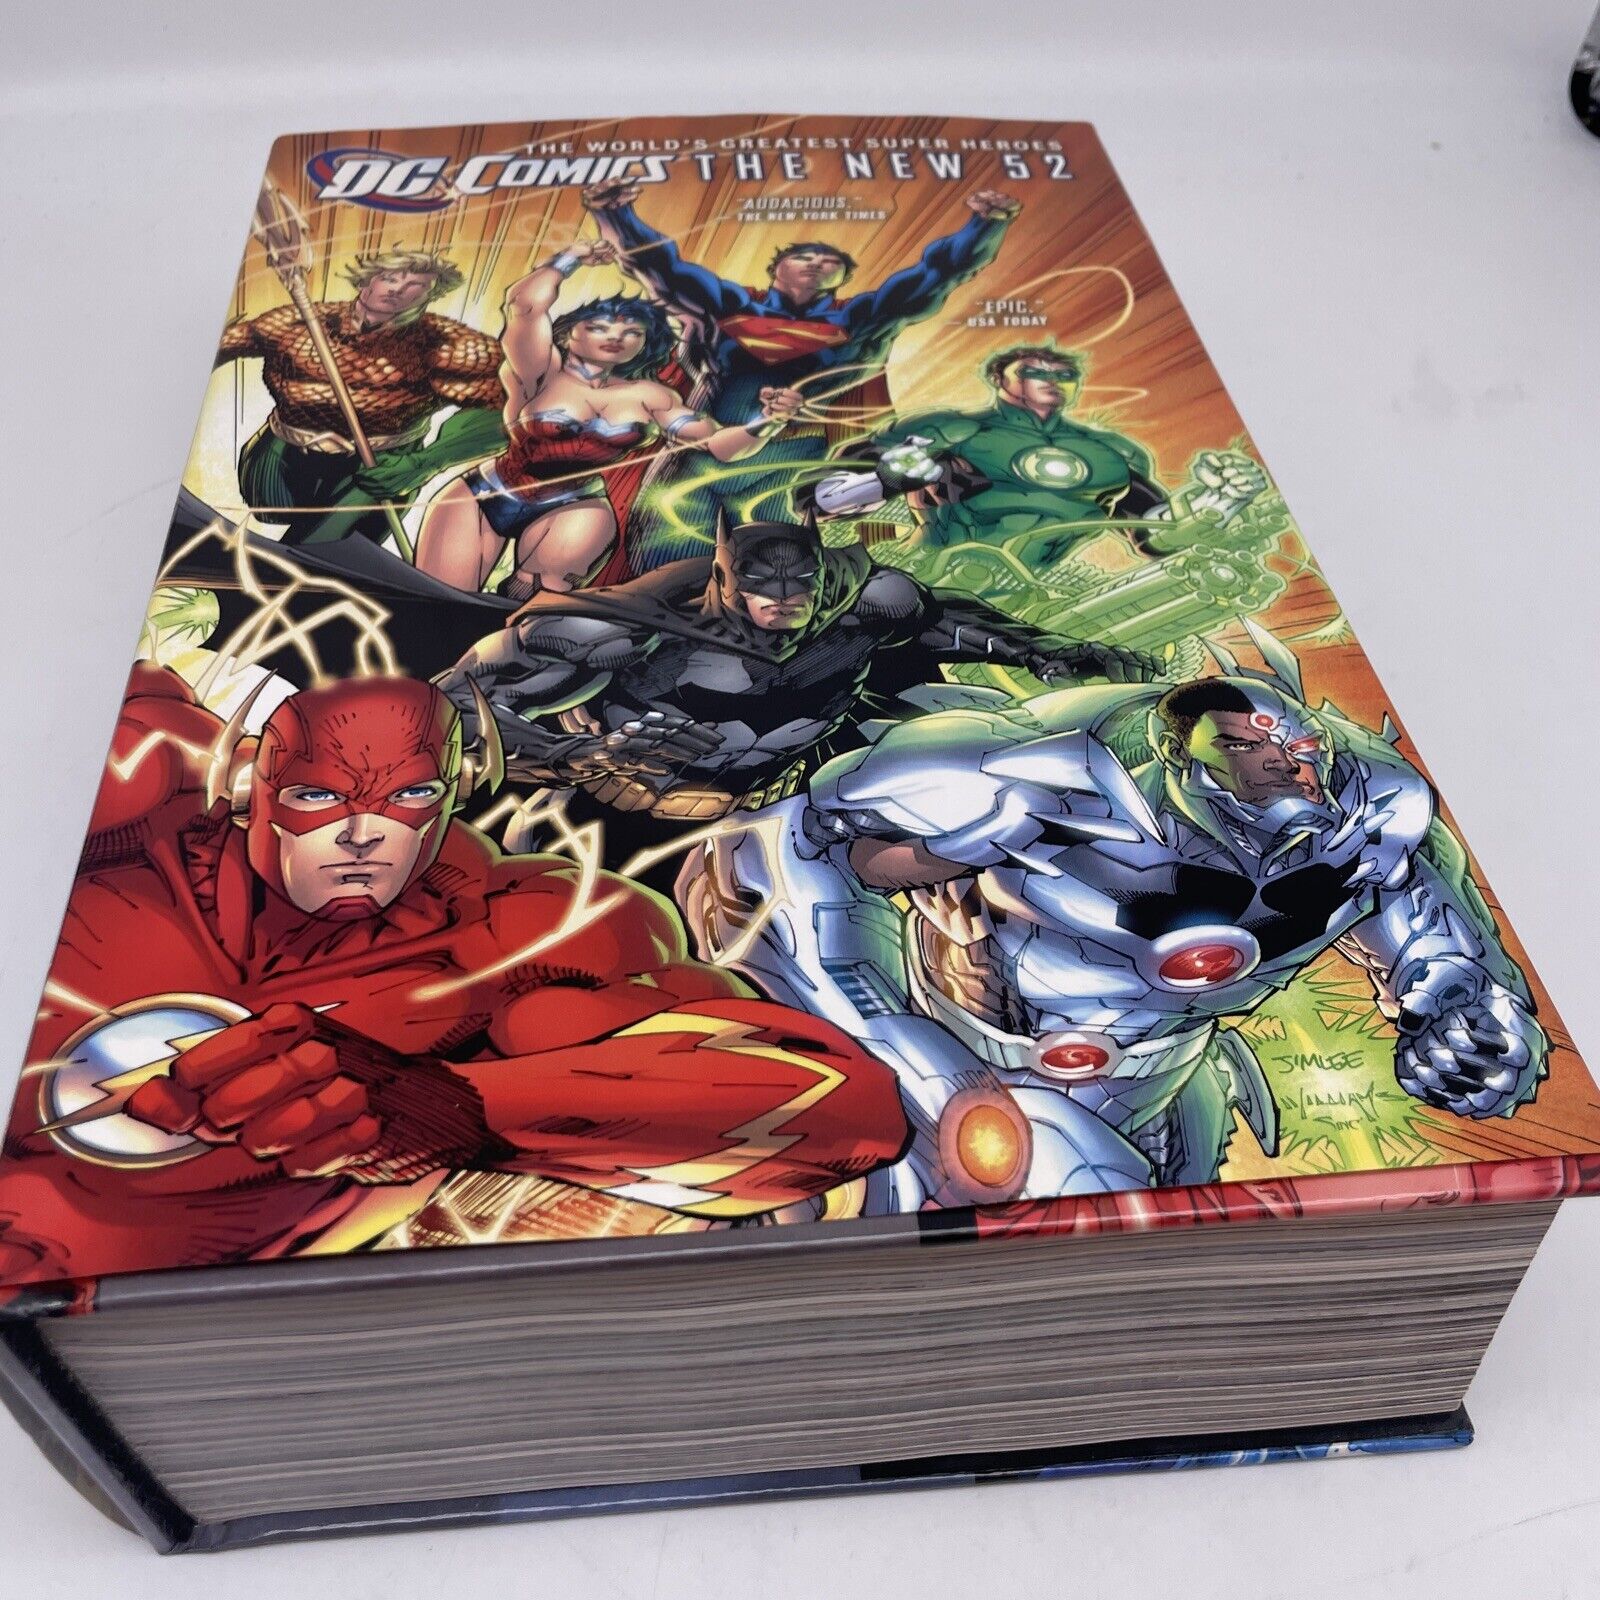 DC Comics: The New 52 by Geoff Johns, Grant Morrison, Scott Snyder, Paul Cornel